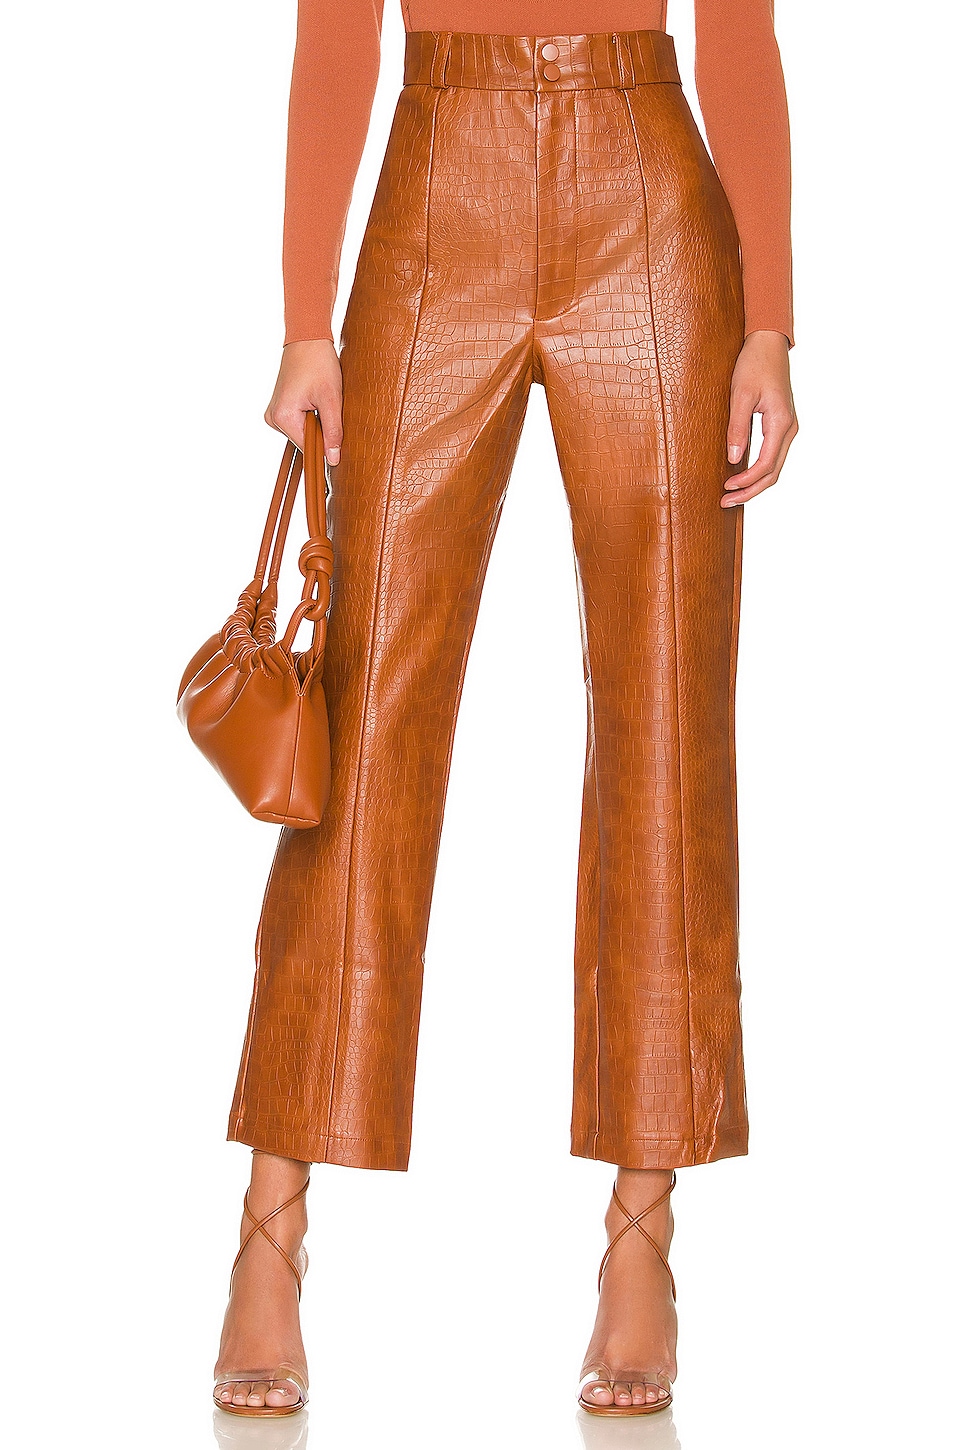 Vegan croco leather perfect fit pants